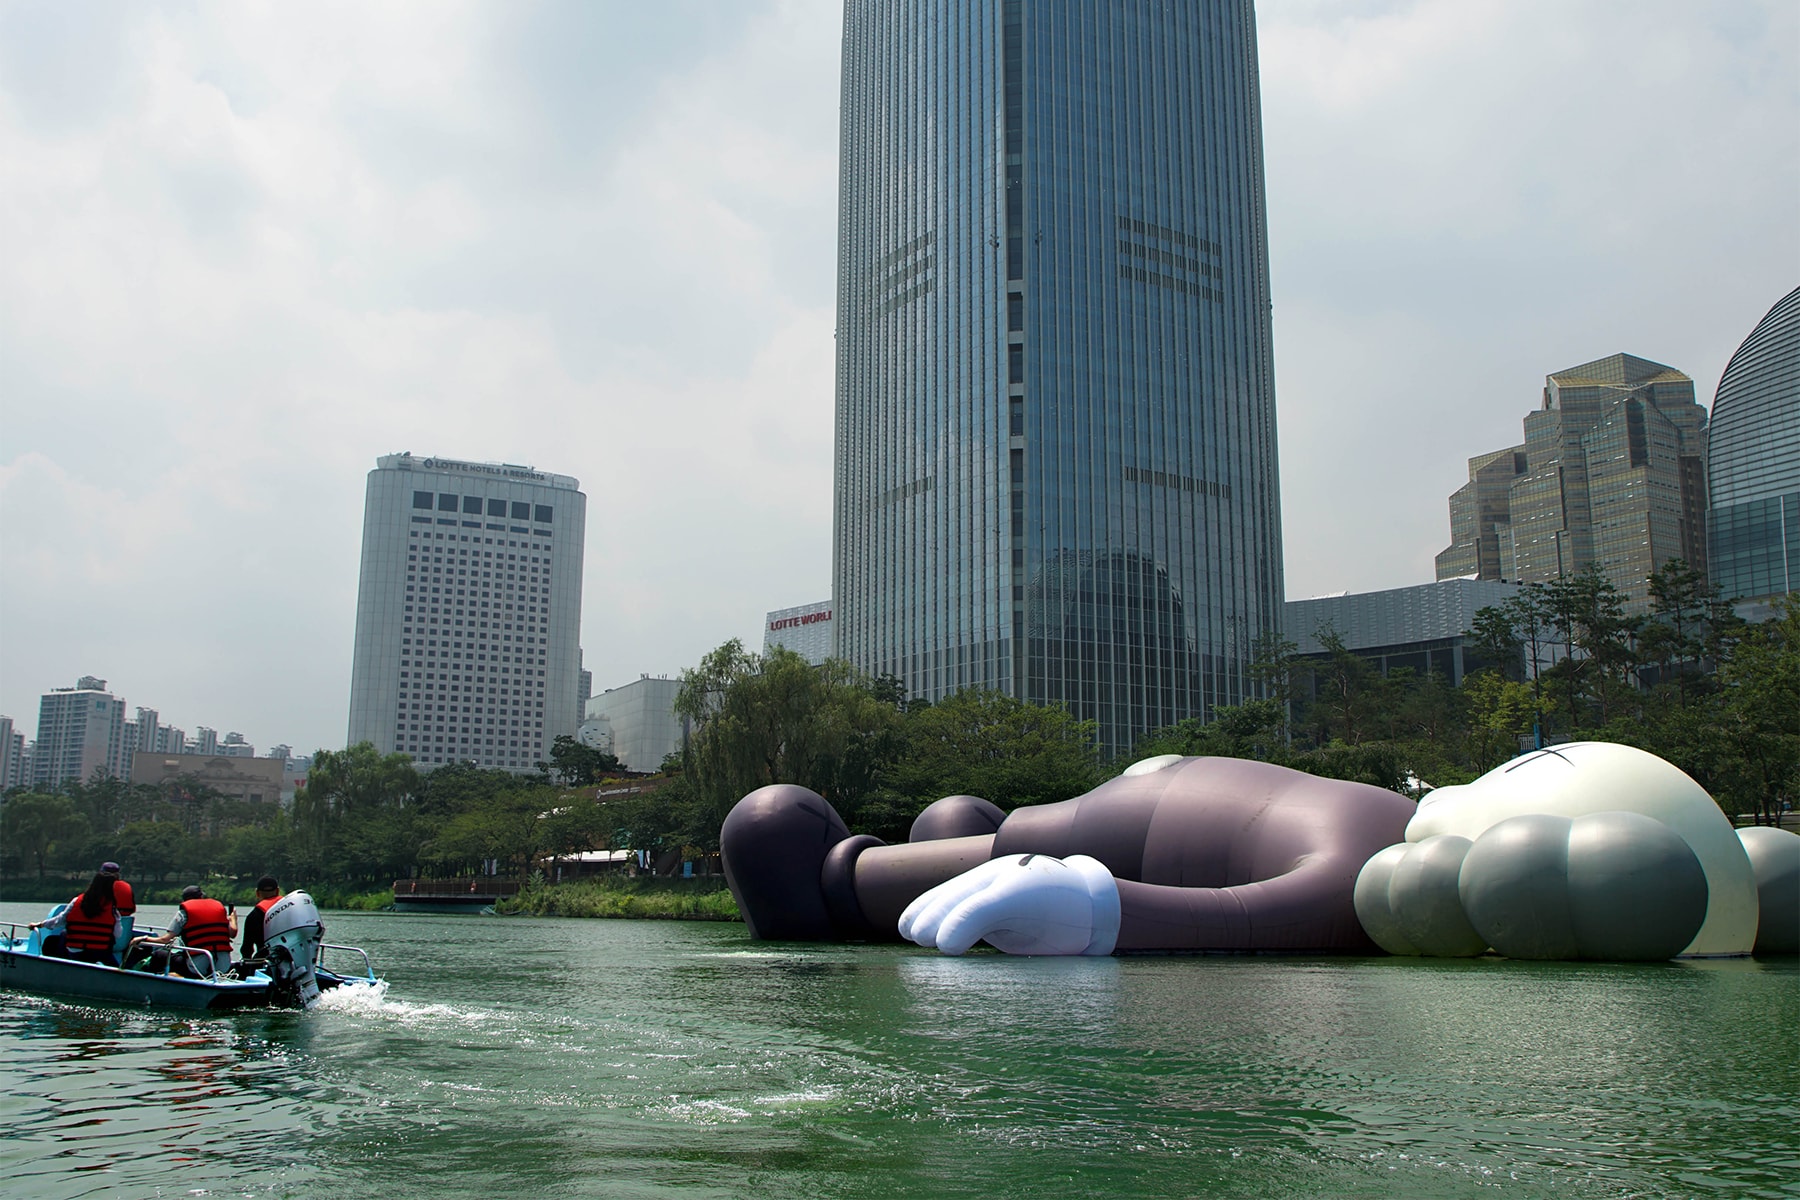 kaws holiday giant floating figure public art seokchon lake